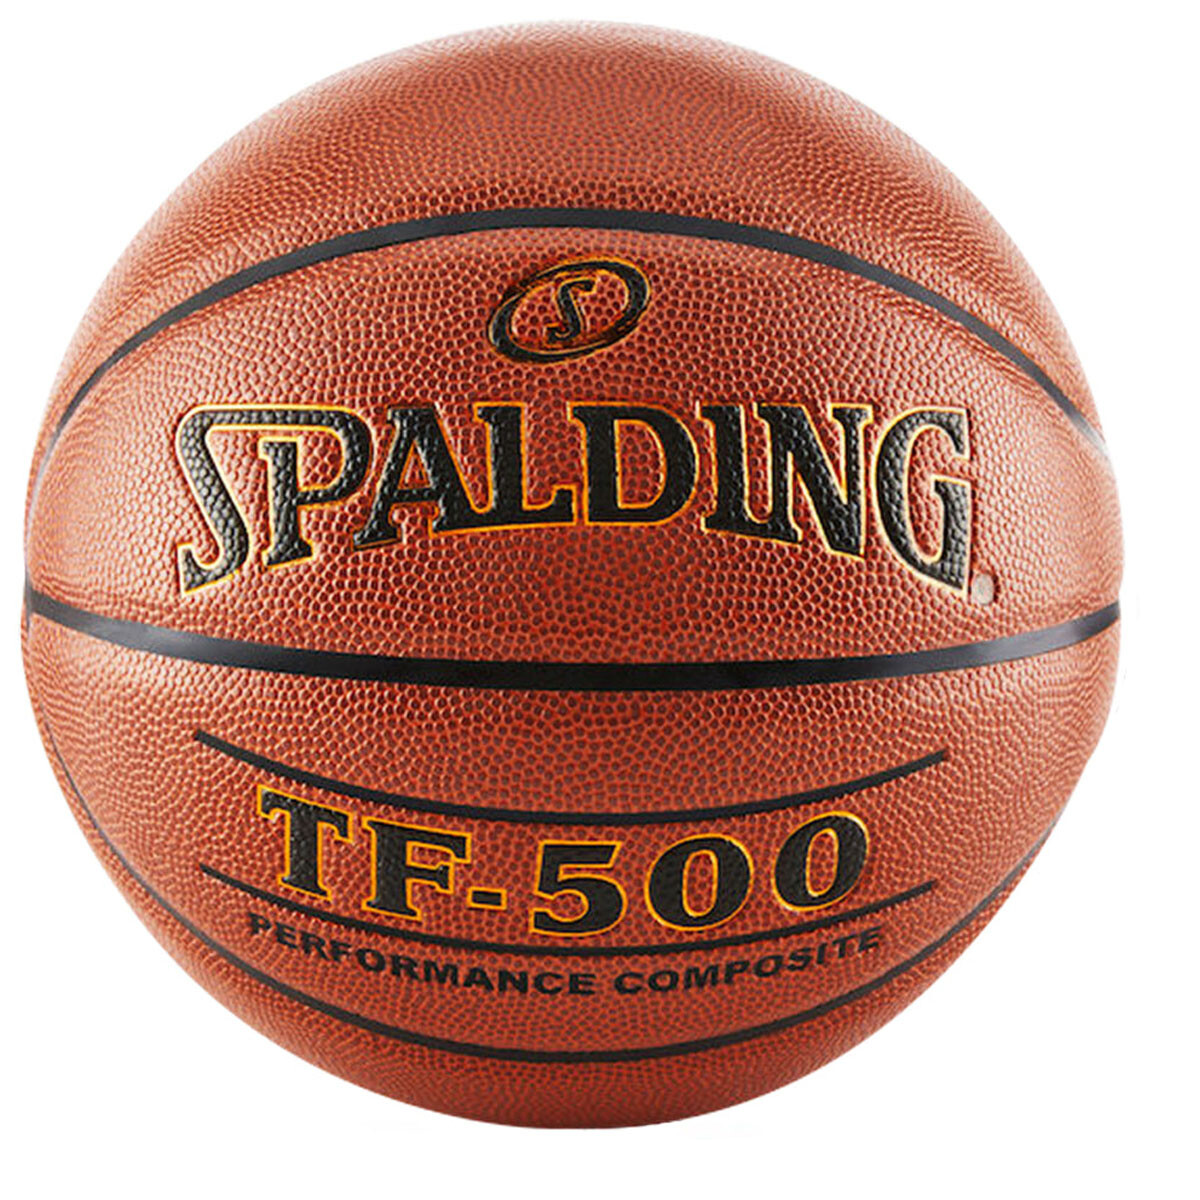 Pelota Spalding Basketball Tf500 N6 / N7 + Regalos! - Nº7 